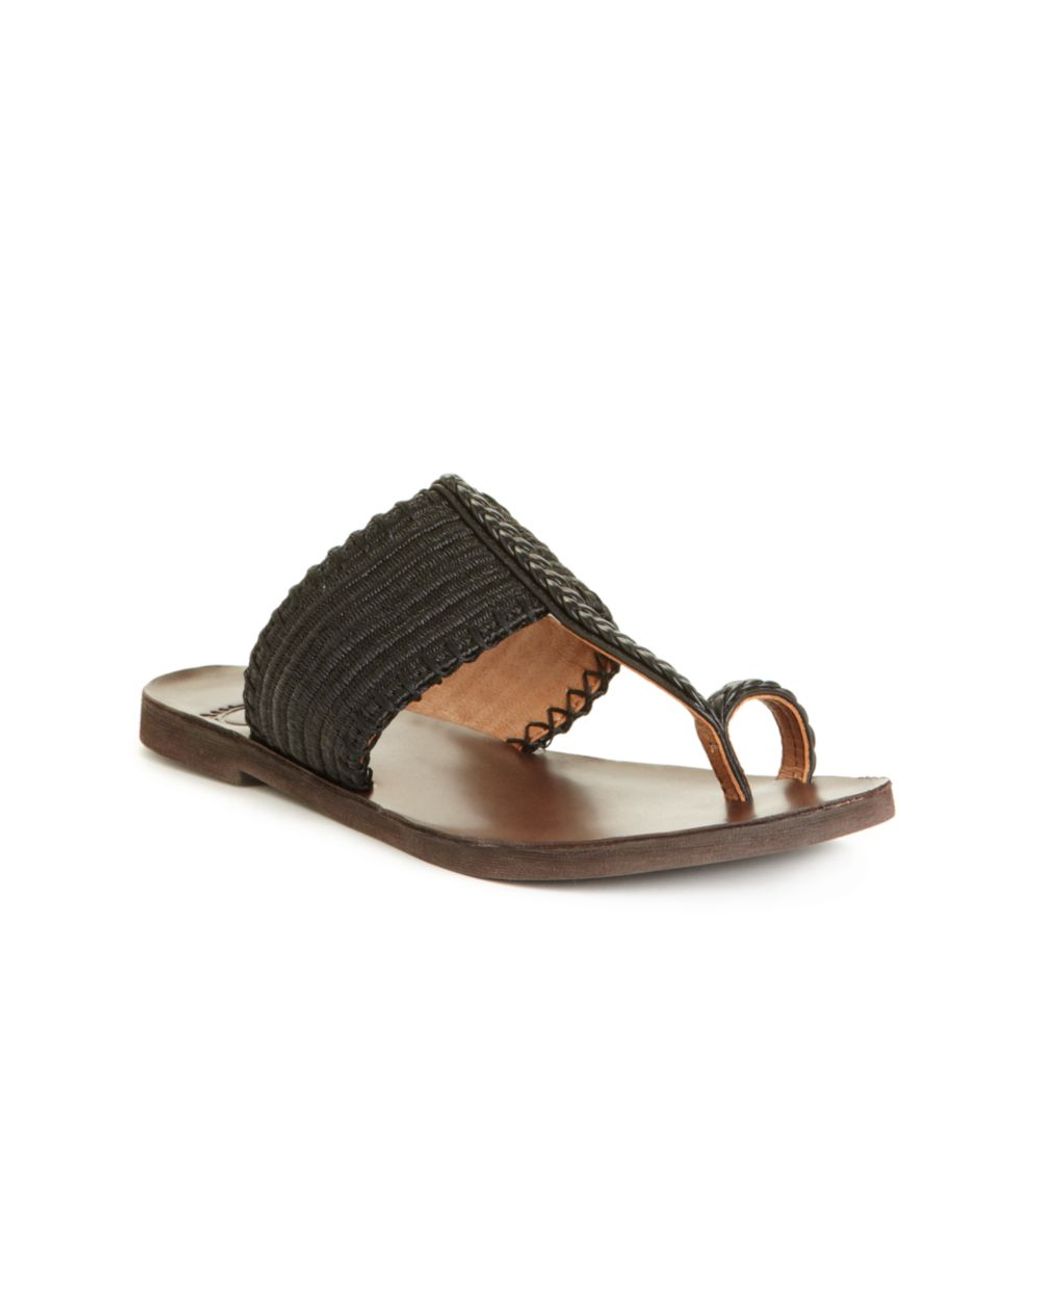 Amazon.com: Flat Sandals for Women,Womens Roman Open Toe Sandals  Buckle-Strap Flat T Strap Sandals Beach Sandals Black : Sports & Outdoors